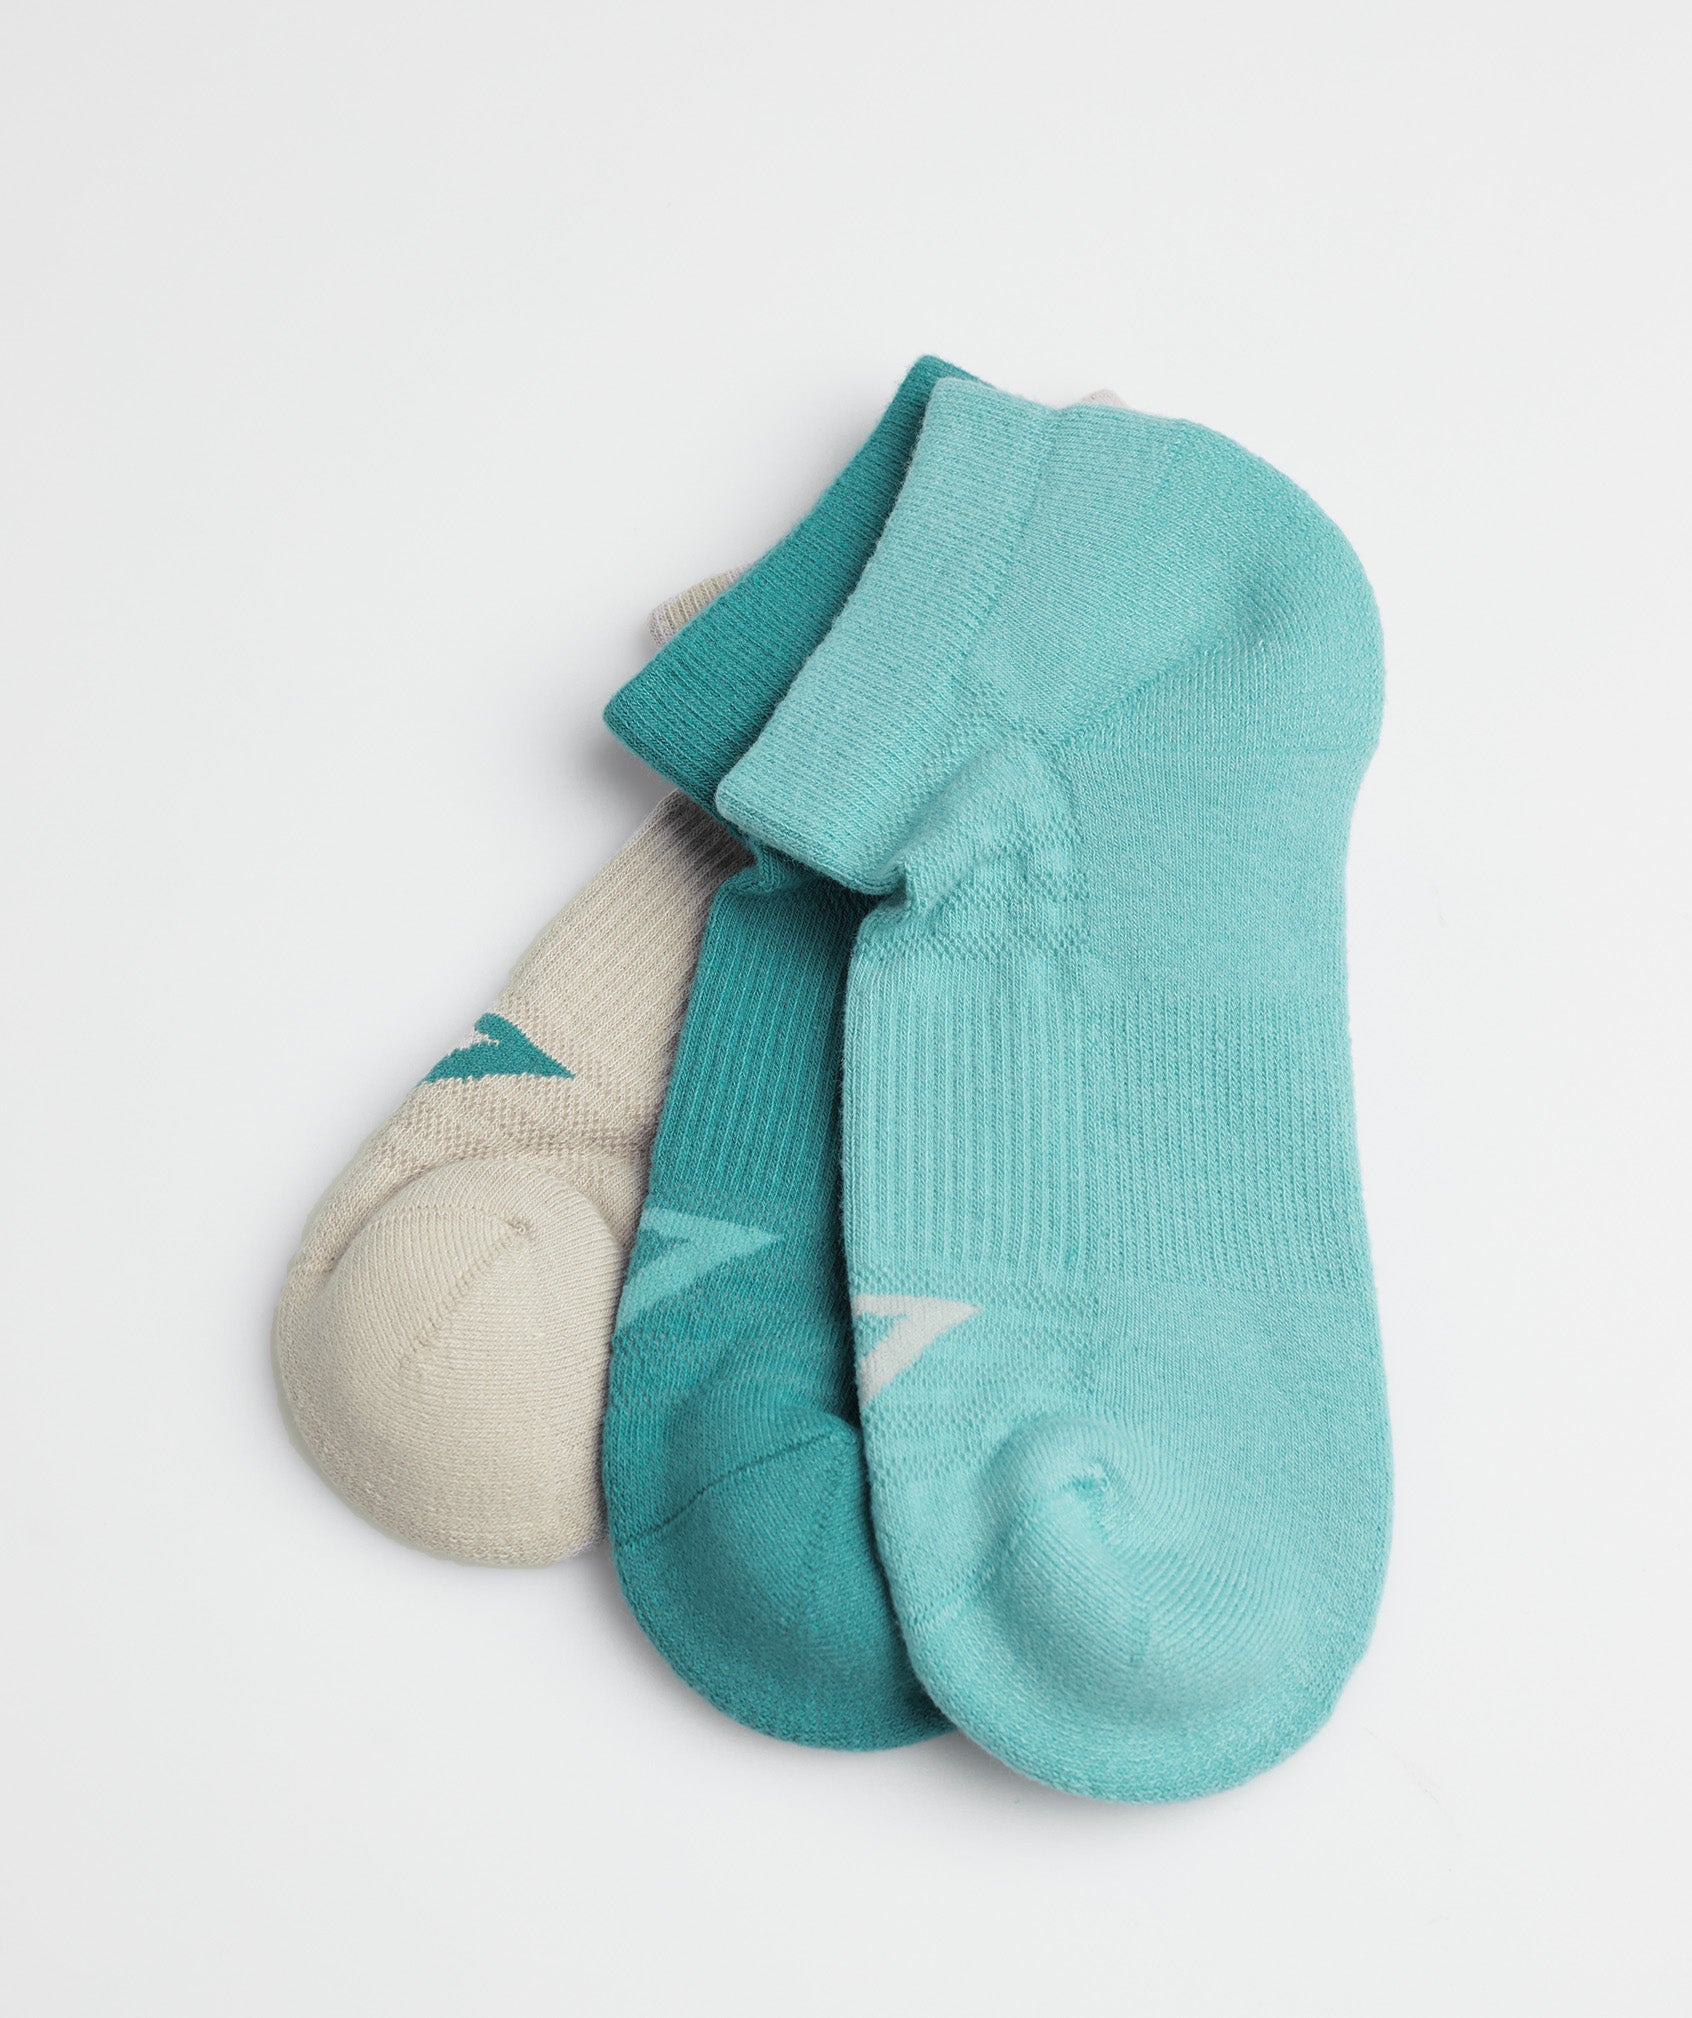 Trainer Socks 3pk in Blue/Jewel Green/Pebble Grey